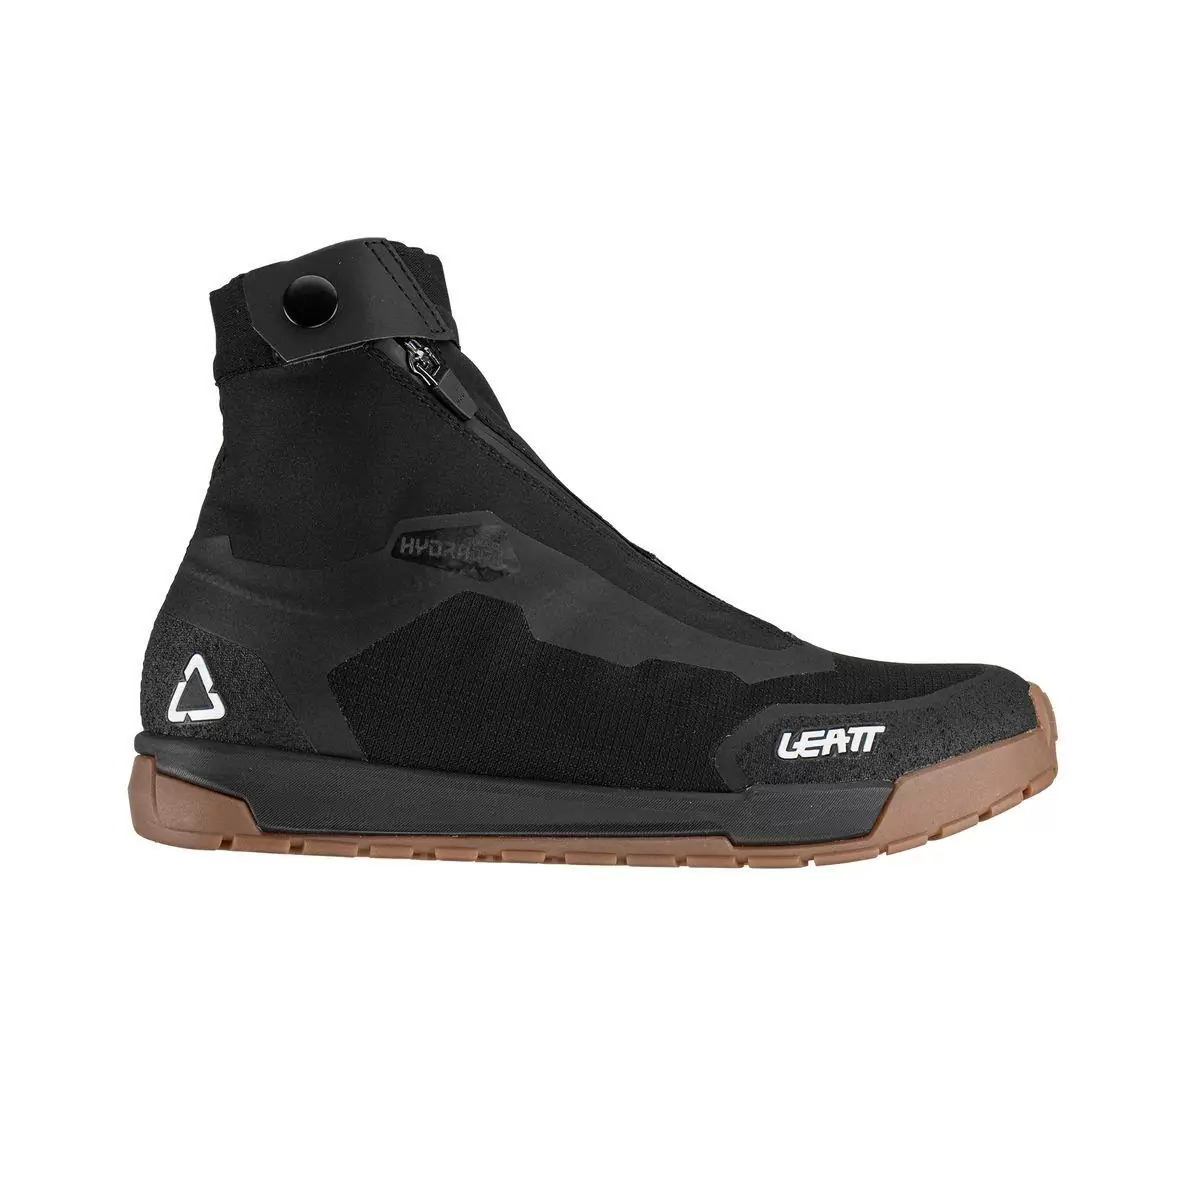 Waterproof Shoes MTB 7.0 HydraDri Flat Black Size 41.5 - image